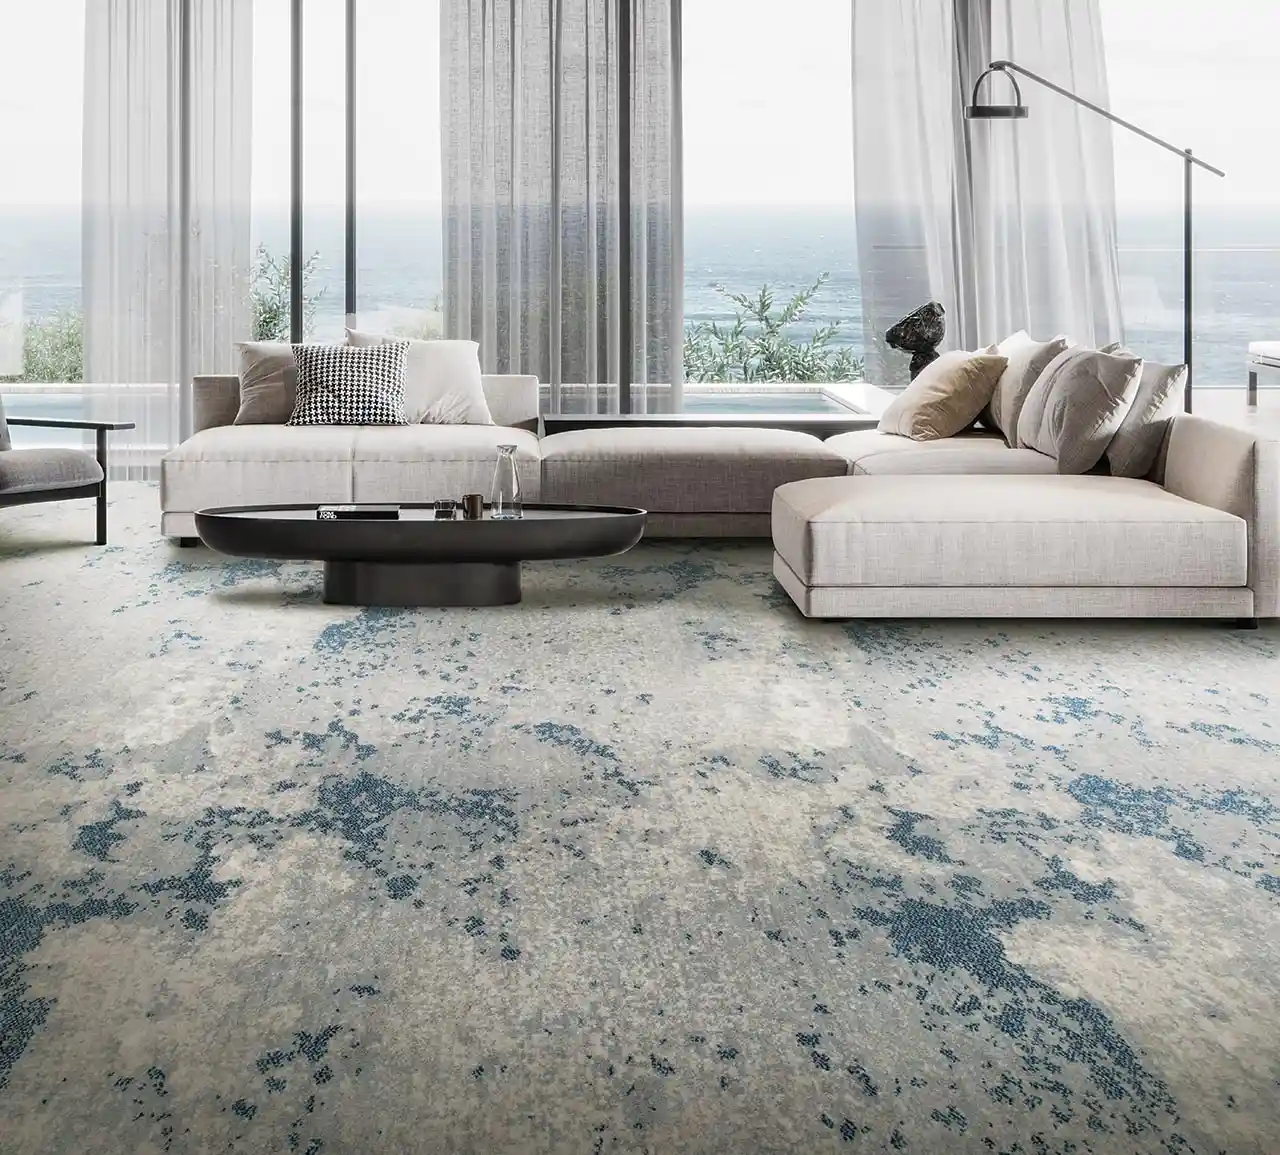 Blue and white carpet